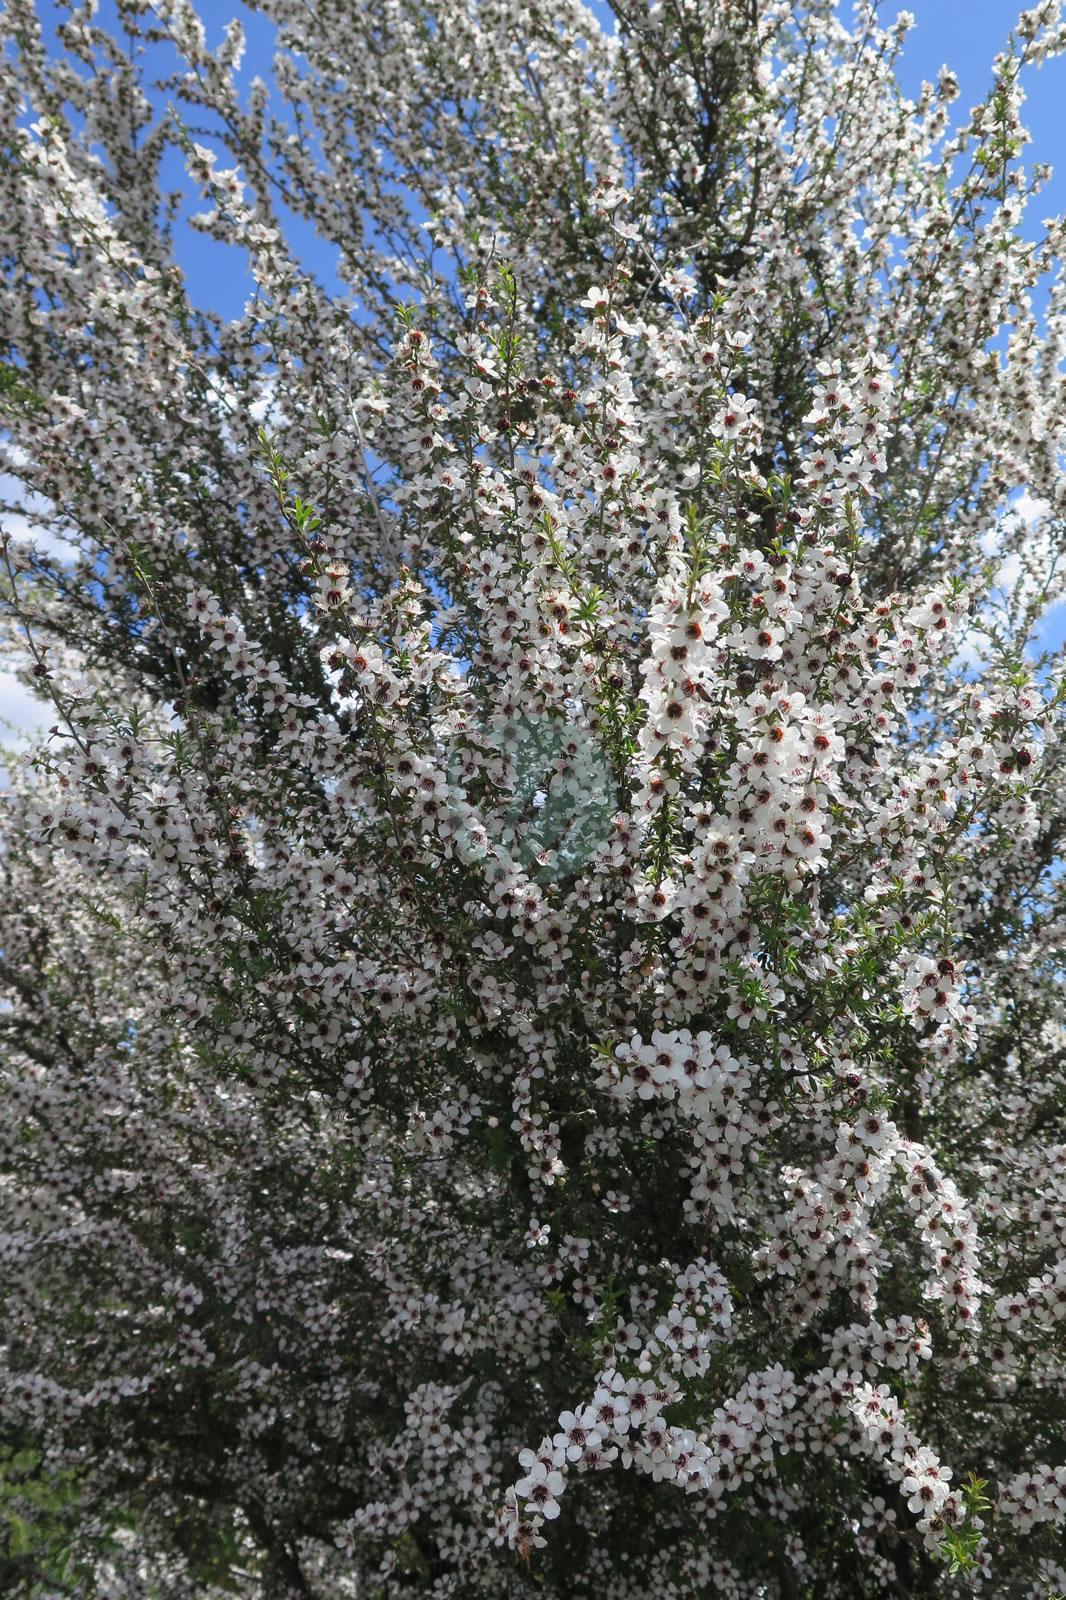 Manuka (Leptospermum scoparium, myrte de nouvelle-zelande) - Clorofila